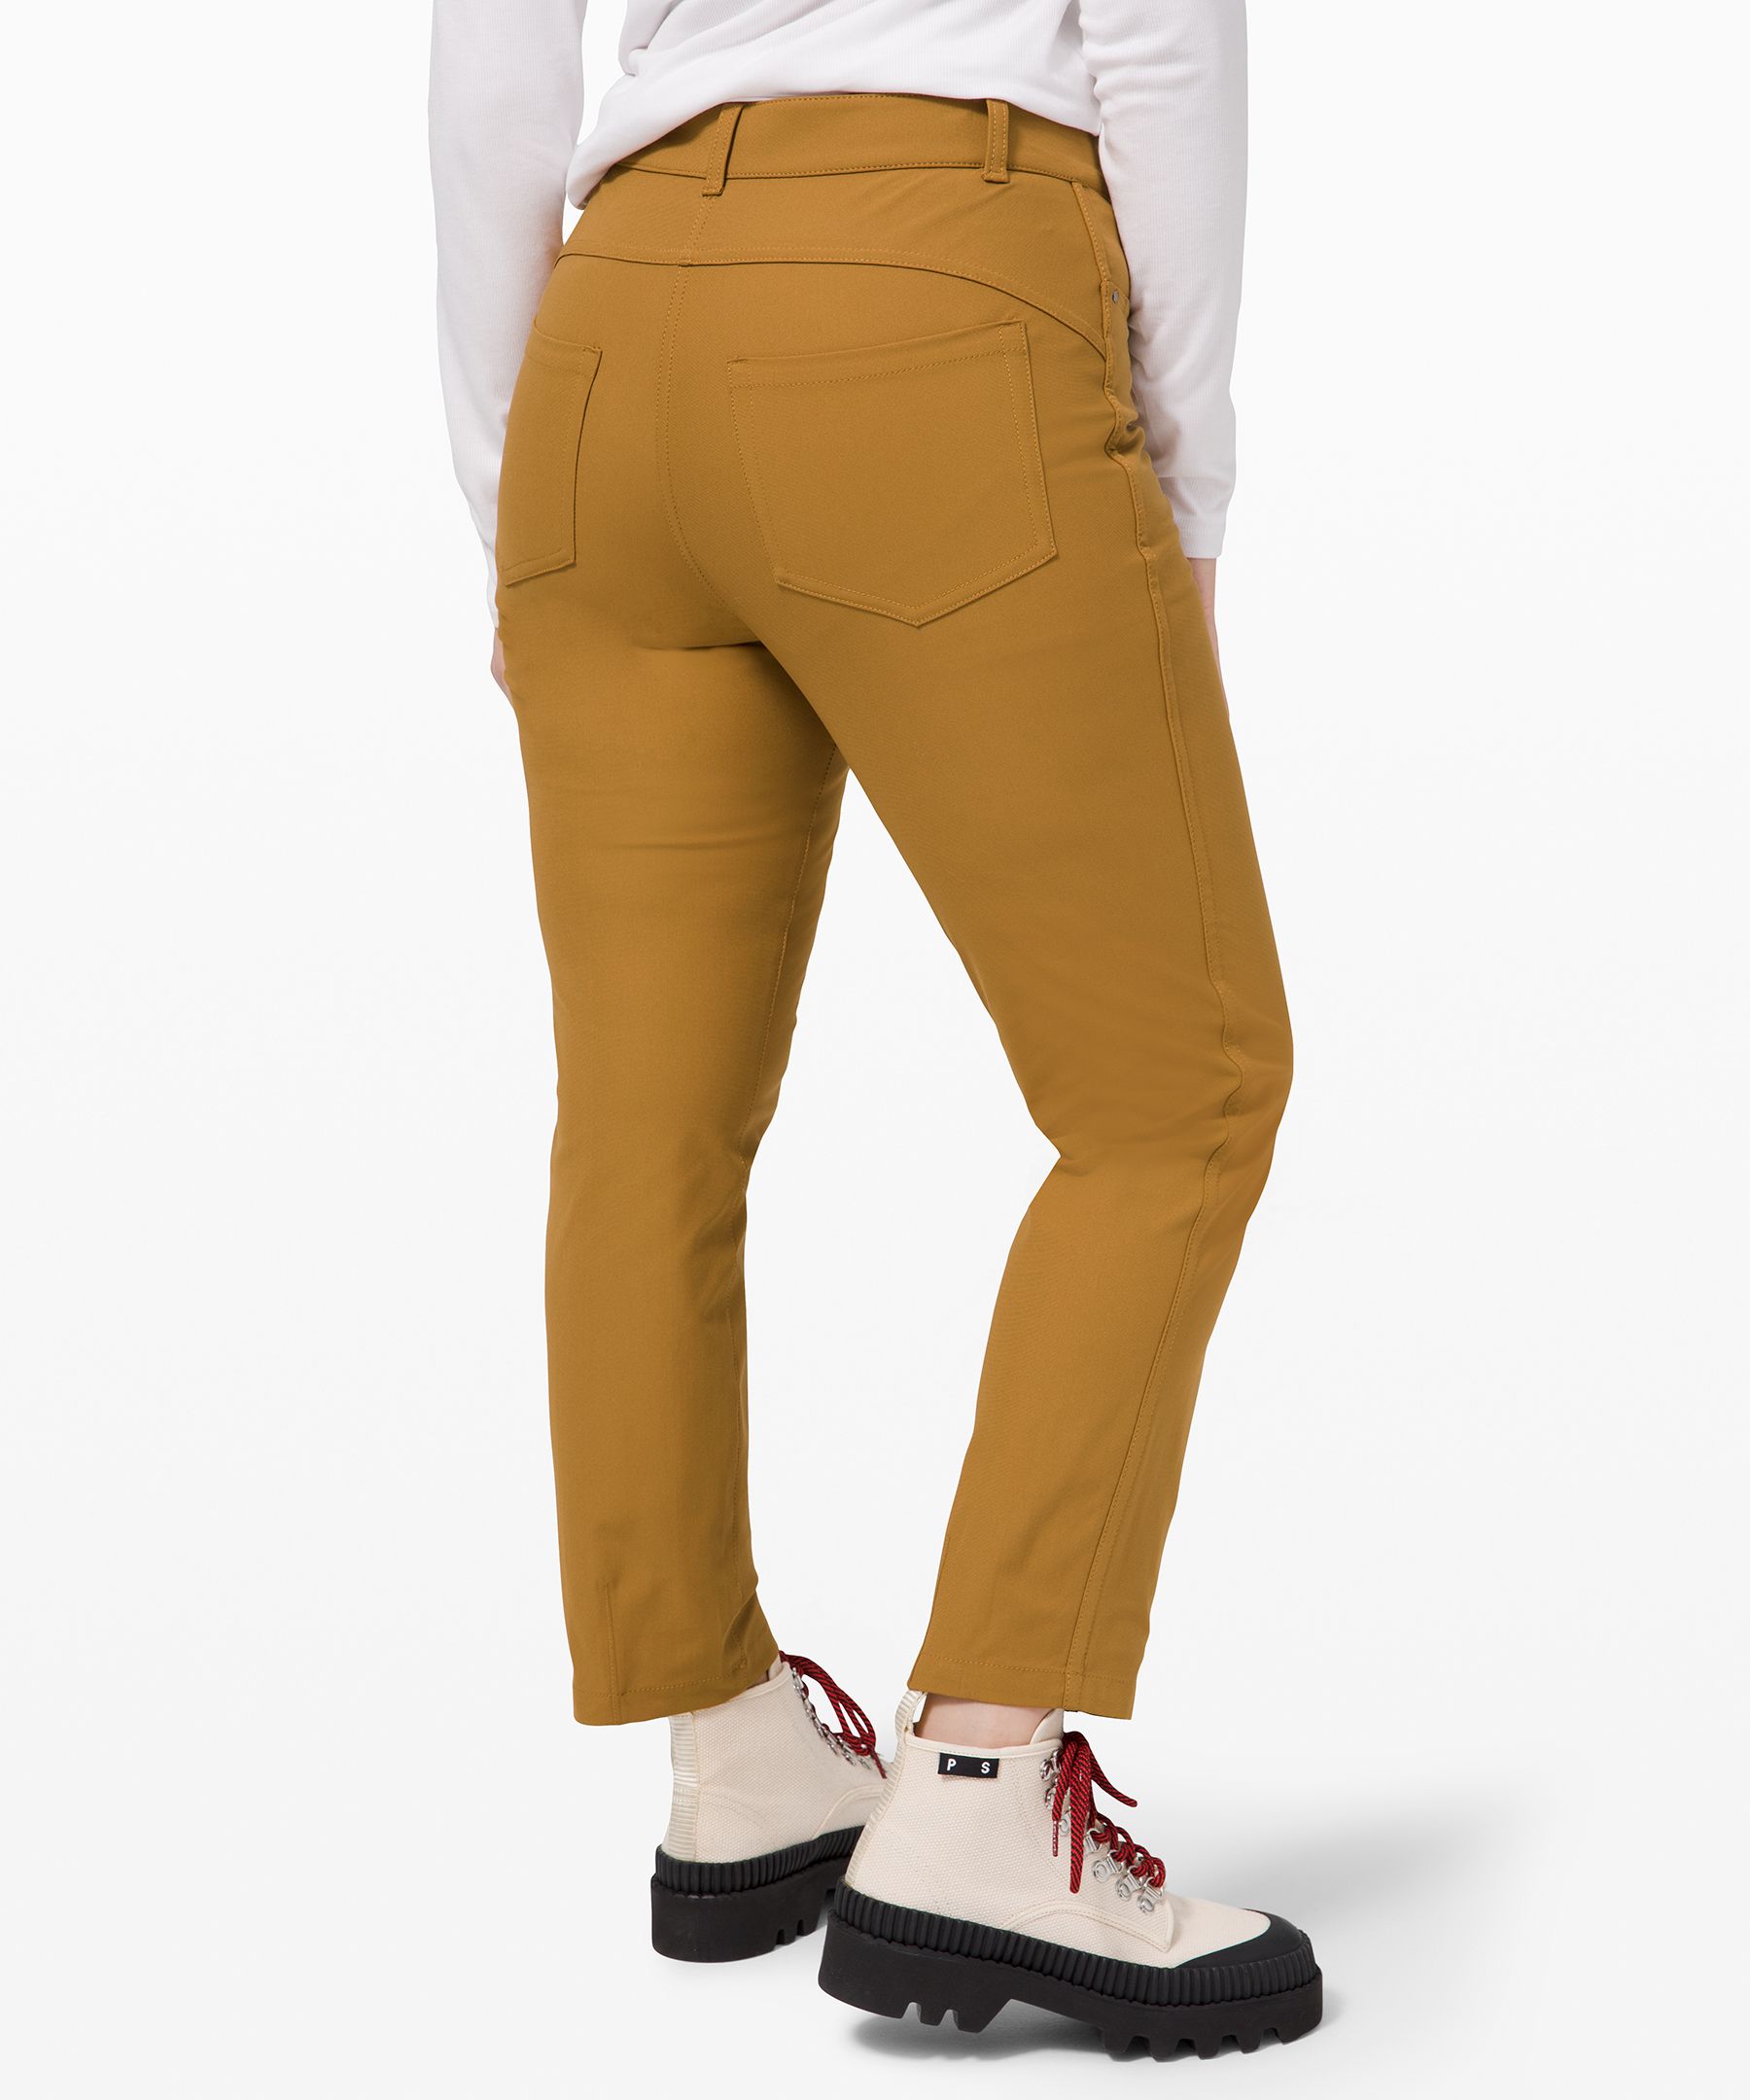 Lululemon City Sleek 5 Pocket Wide-Leg High Rise 7/8 Length Pant Trench size  29